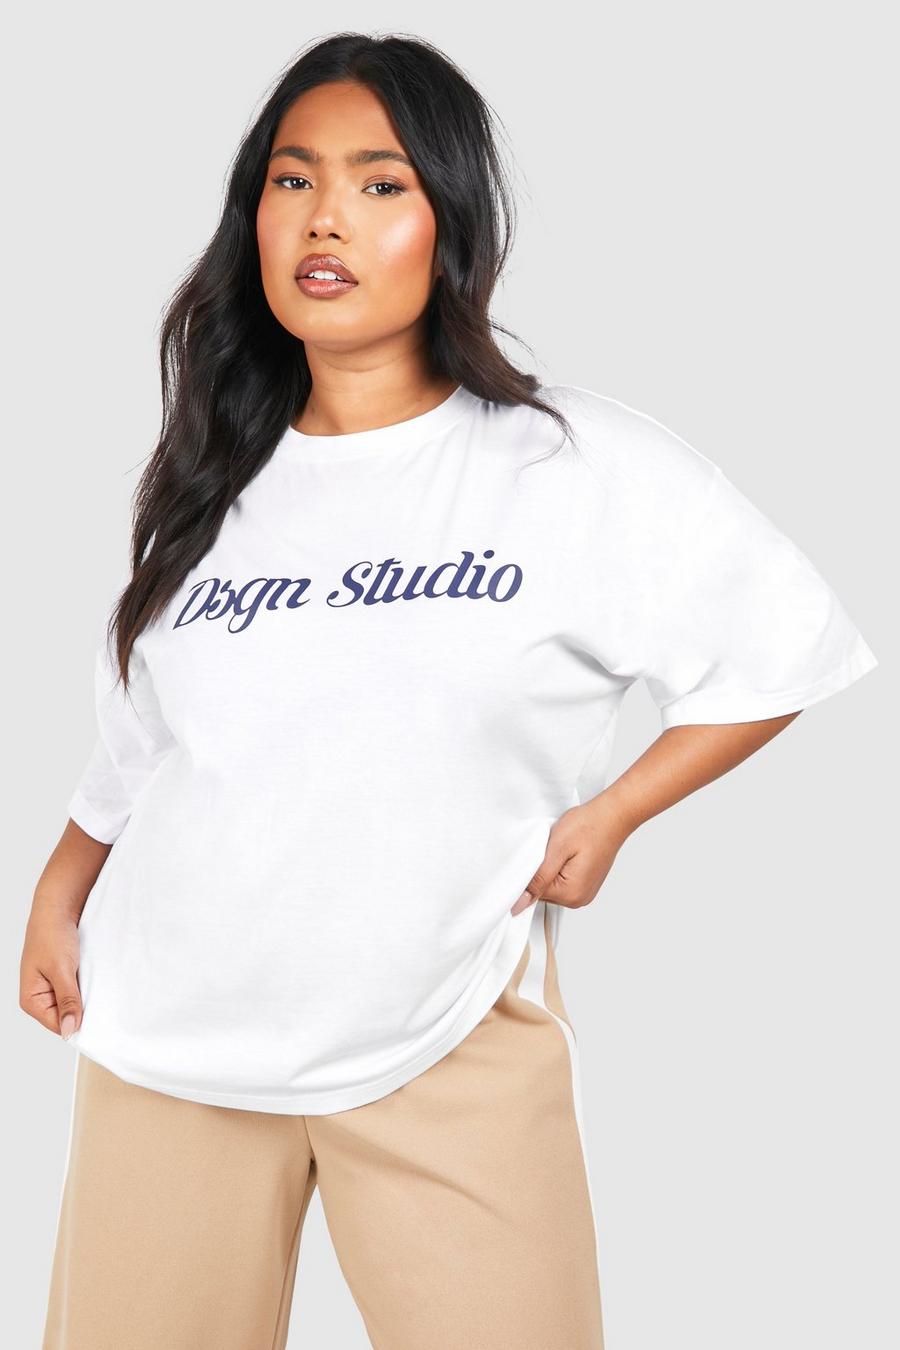 Grande taille - T-shirt oversize à slogan Dsgn Studio, White image number 1